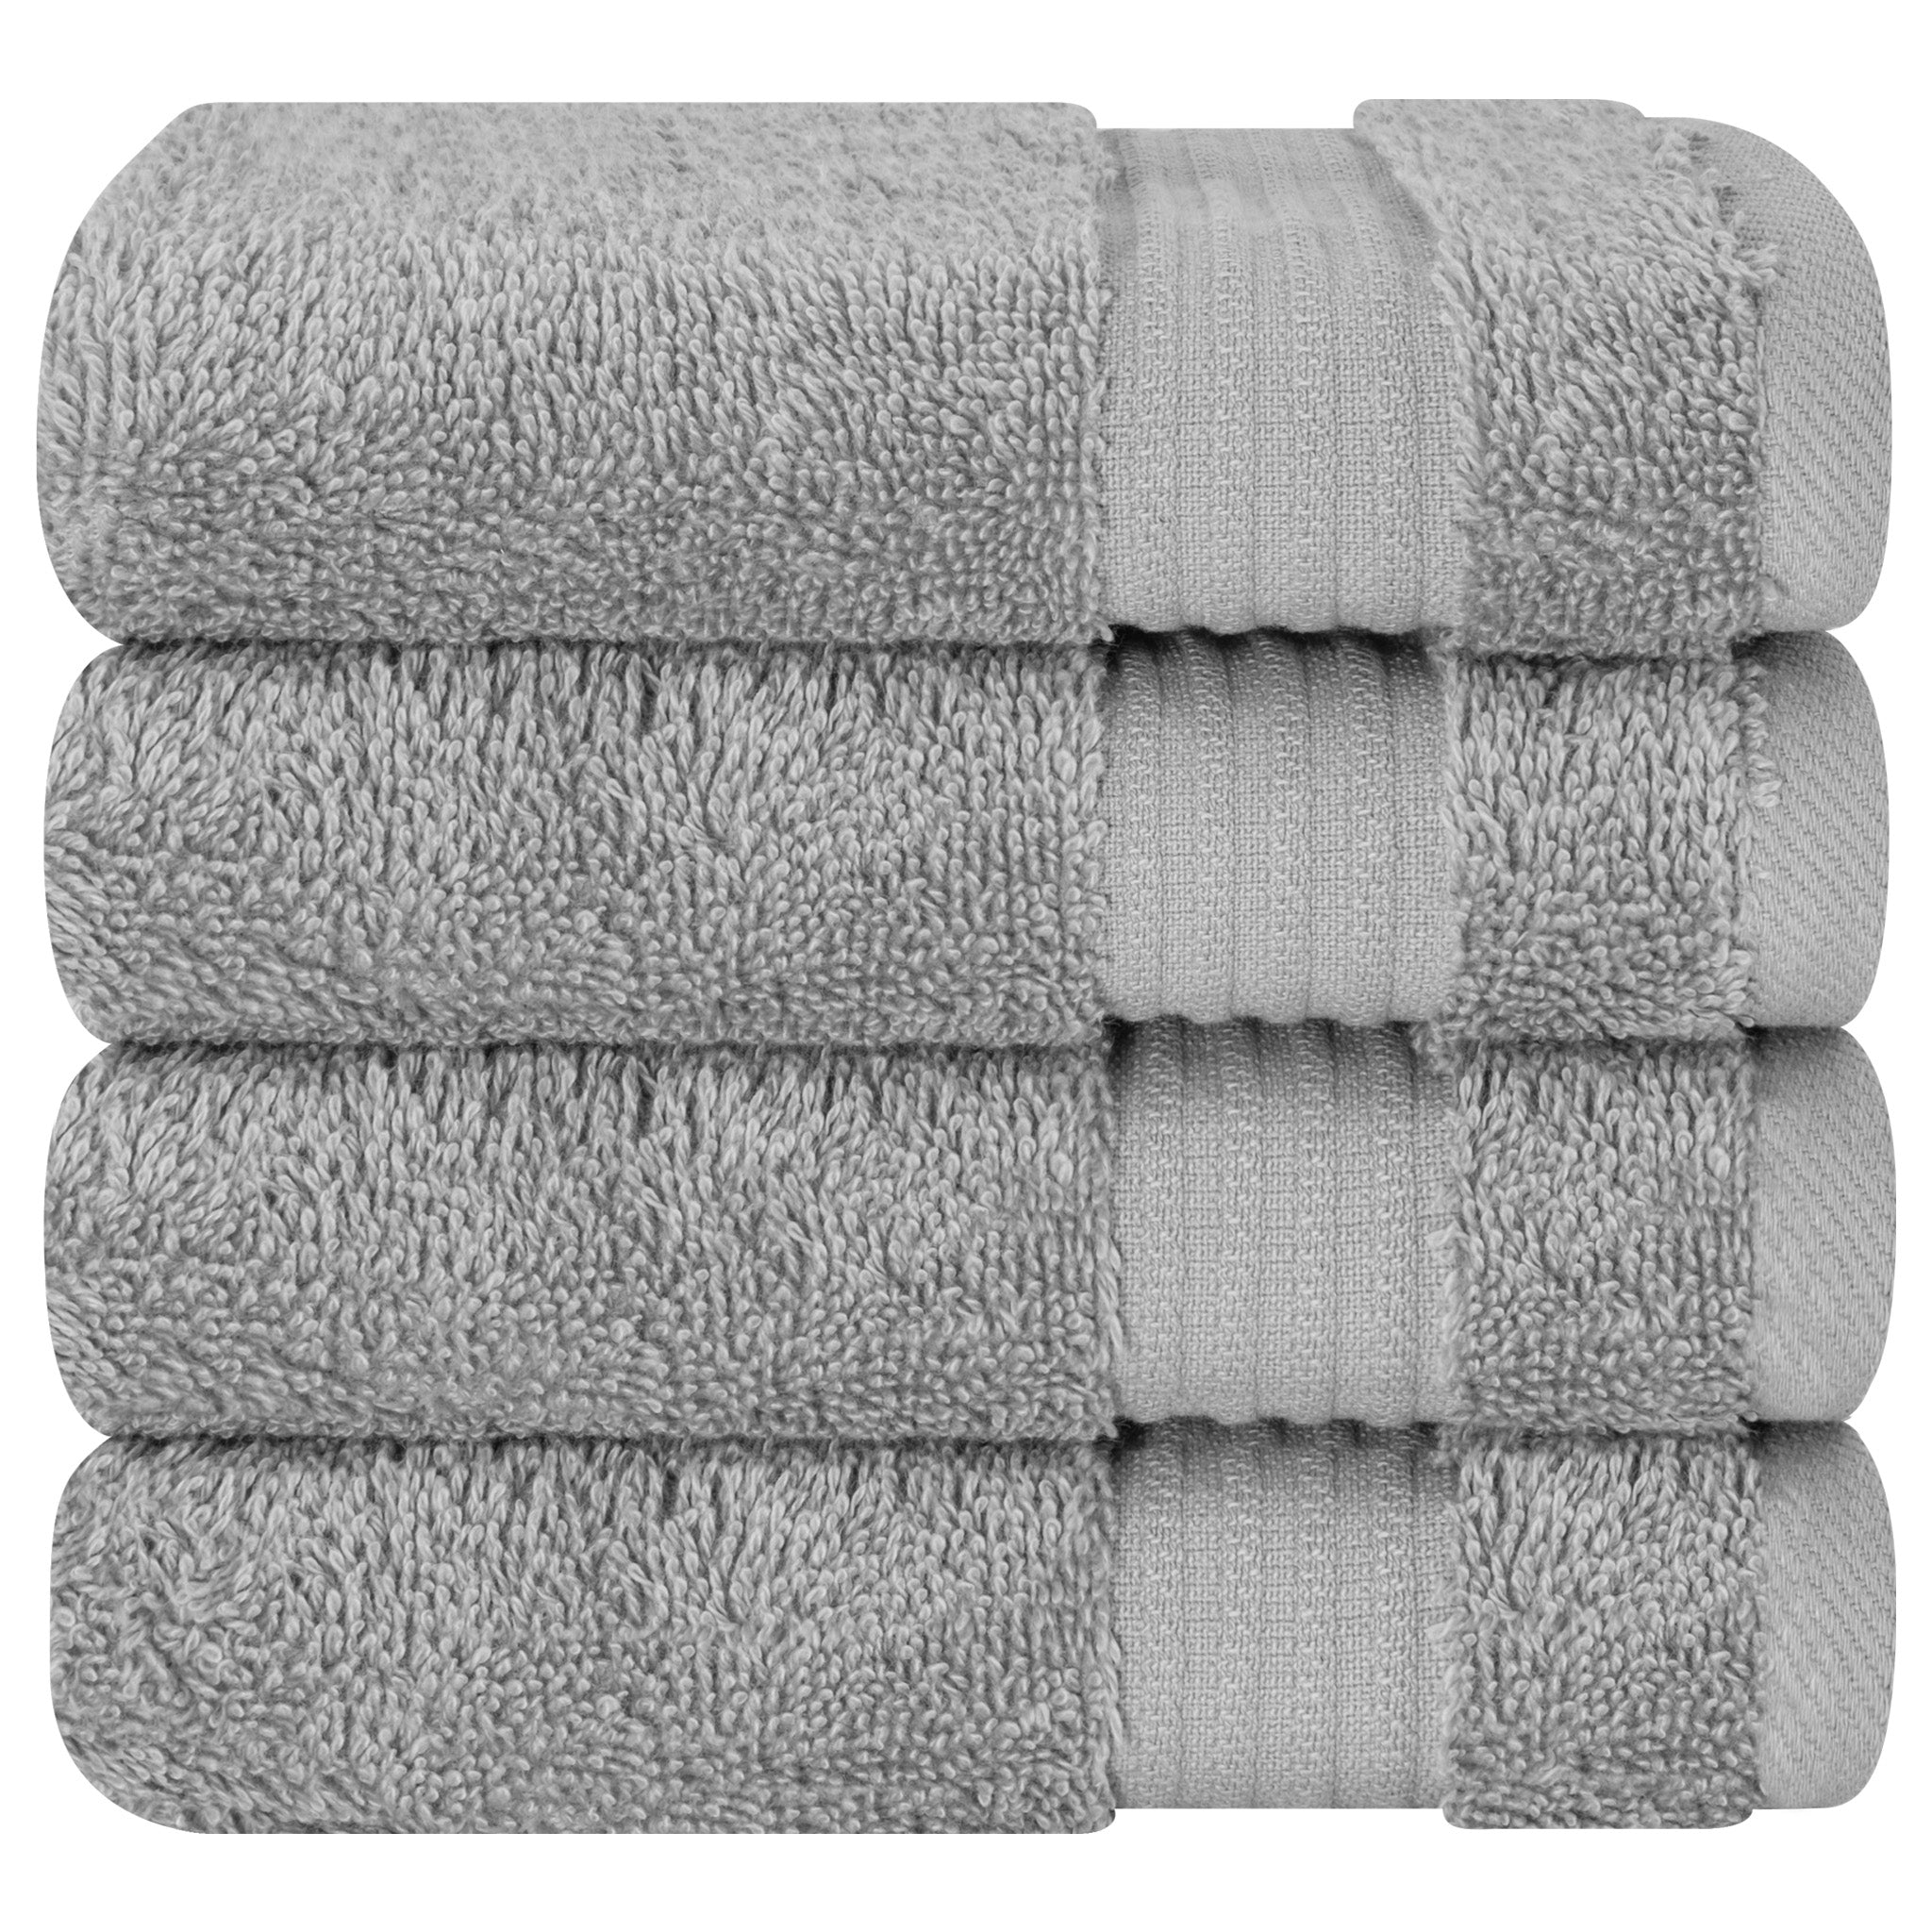 American Soft Linen Bekos 100% Cotton Turkish Towels, 4 Piece Washcloth Towel Set -rockridge-gray-05